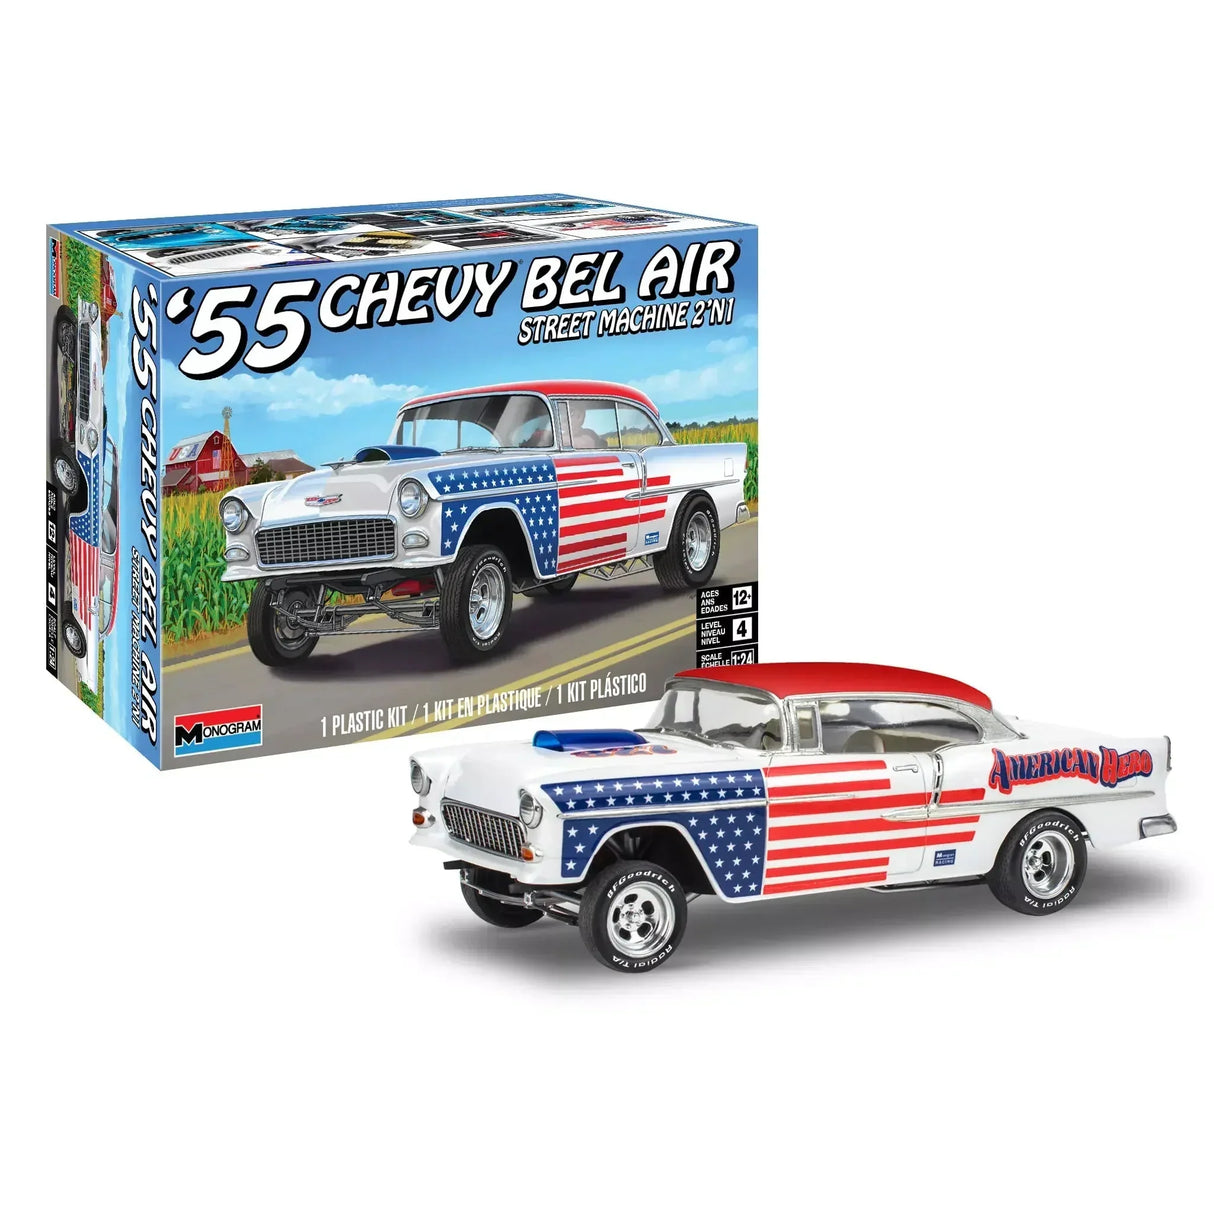 Revell 55 Chevy Bel Air Street Machine 2n1 Skill 4